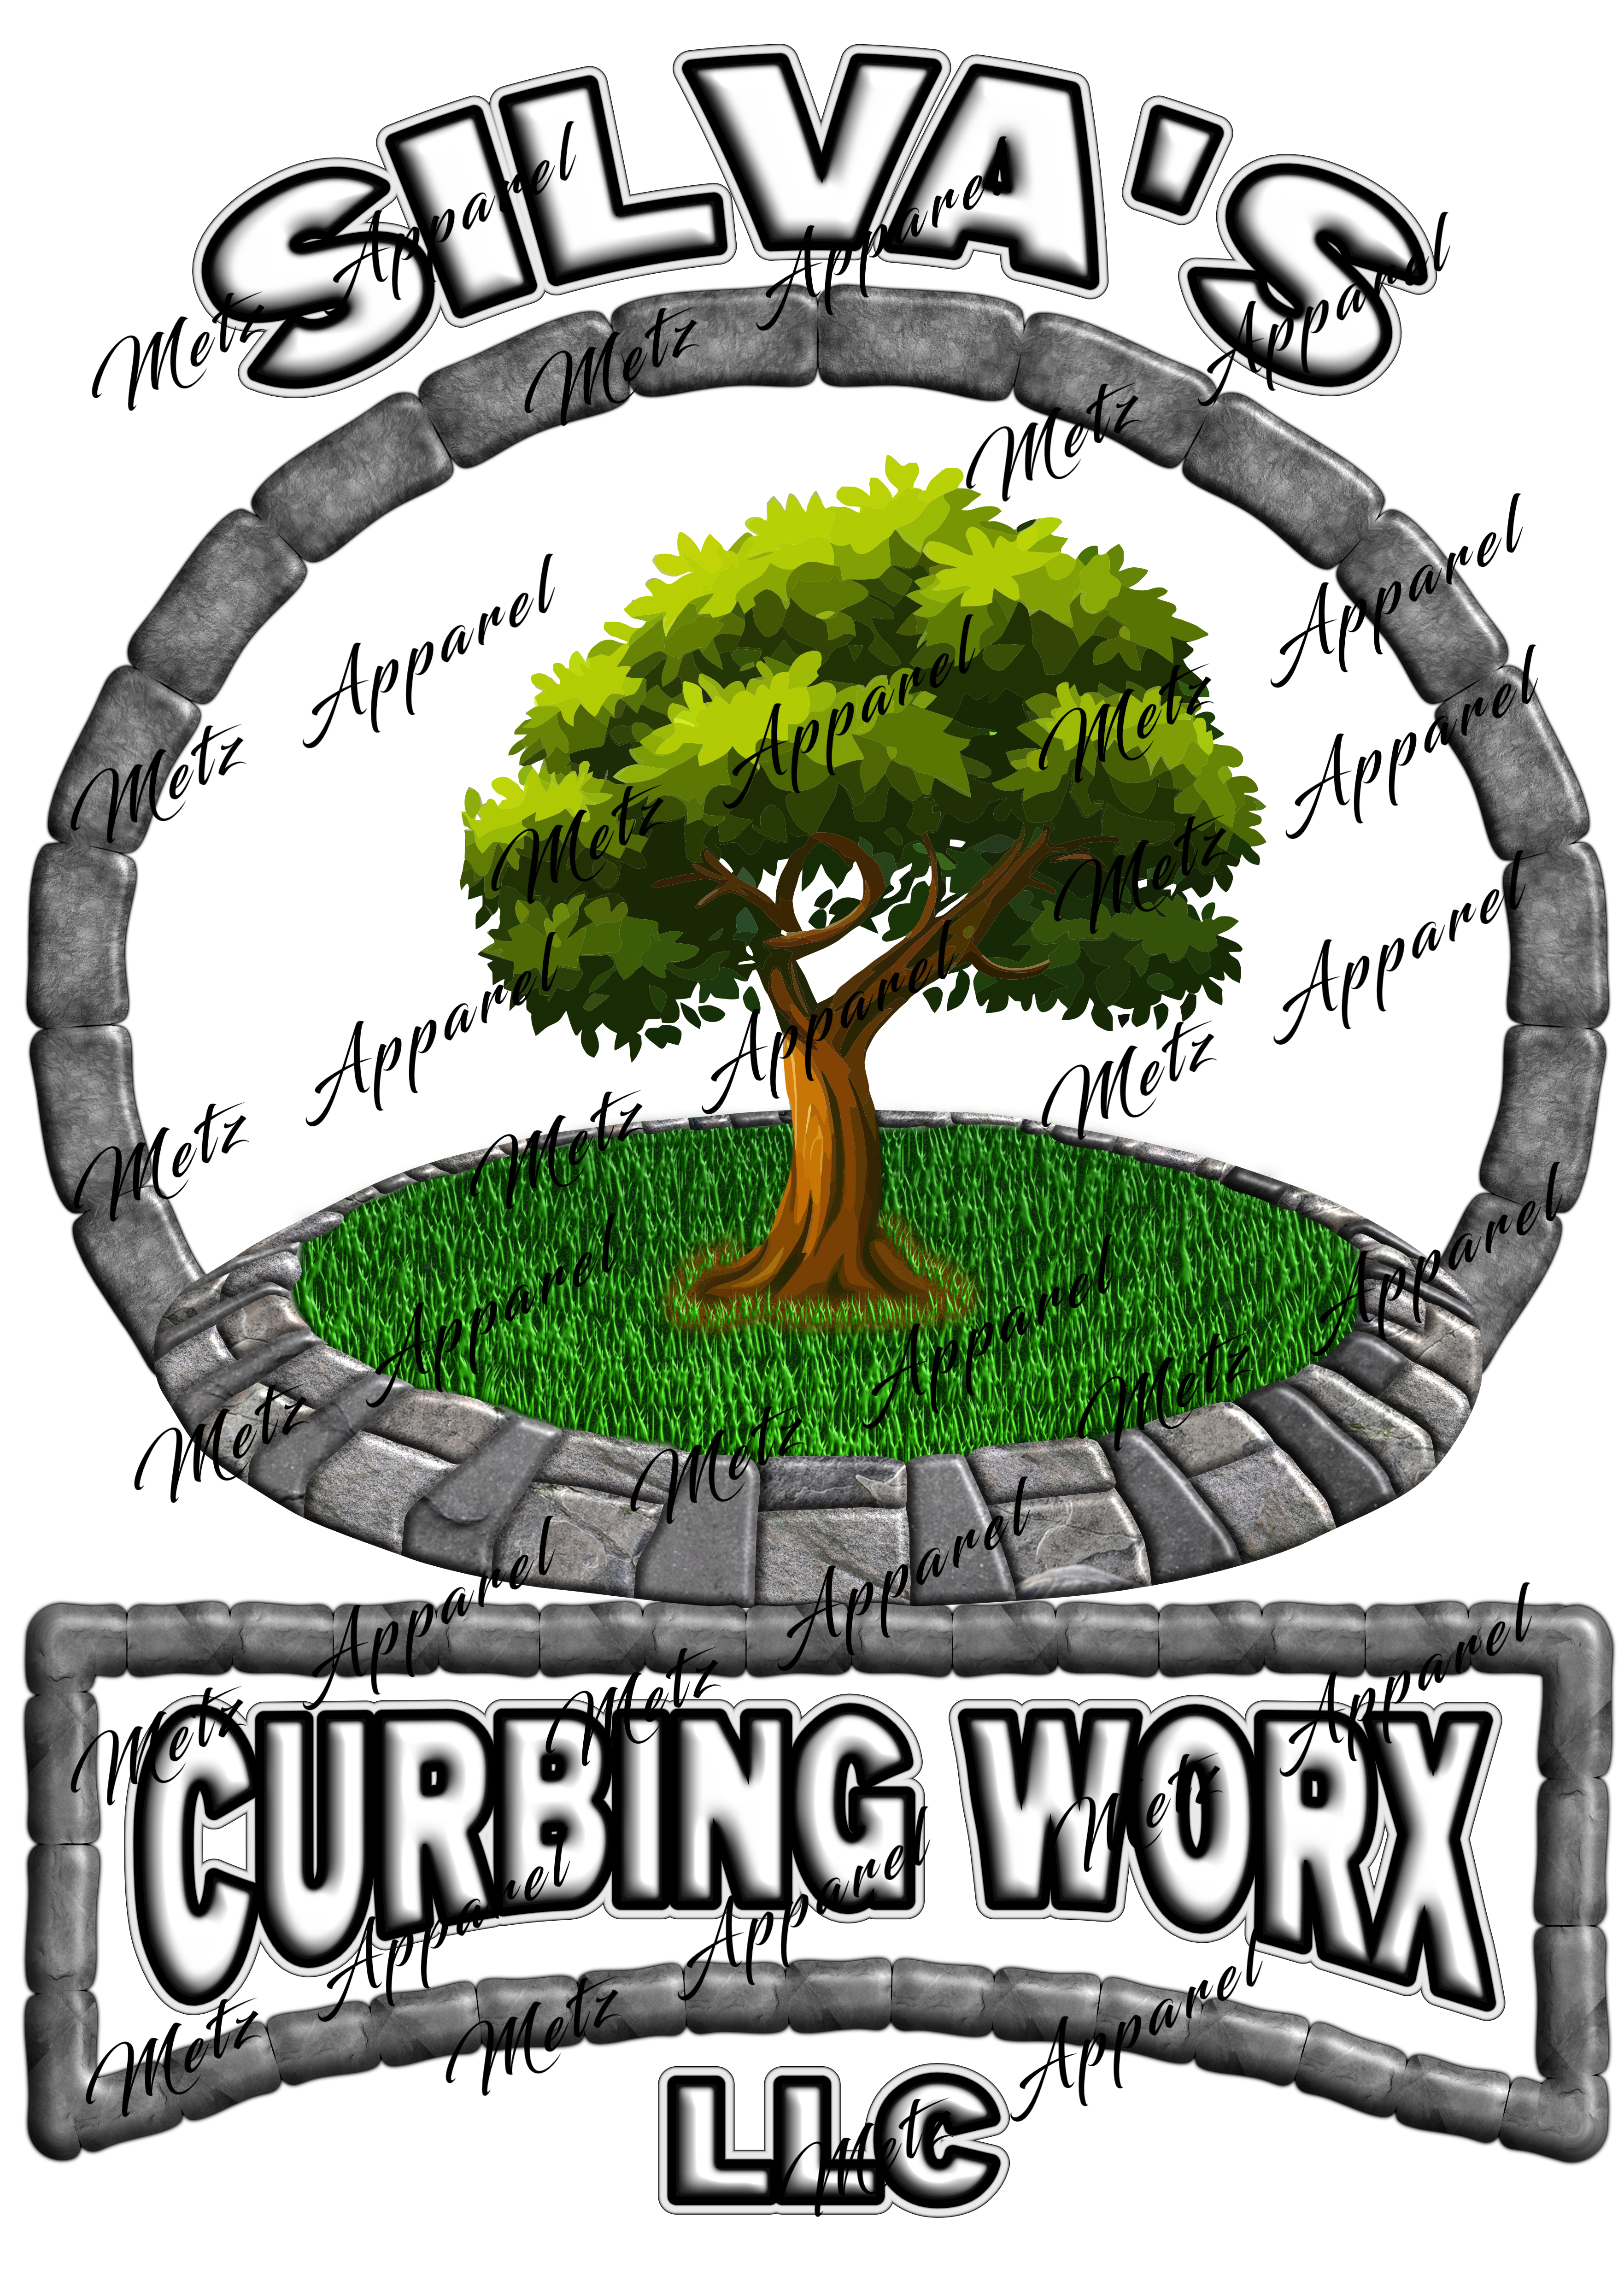 Silva's Curbing Worx LLC